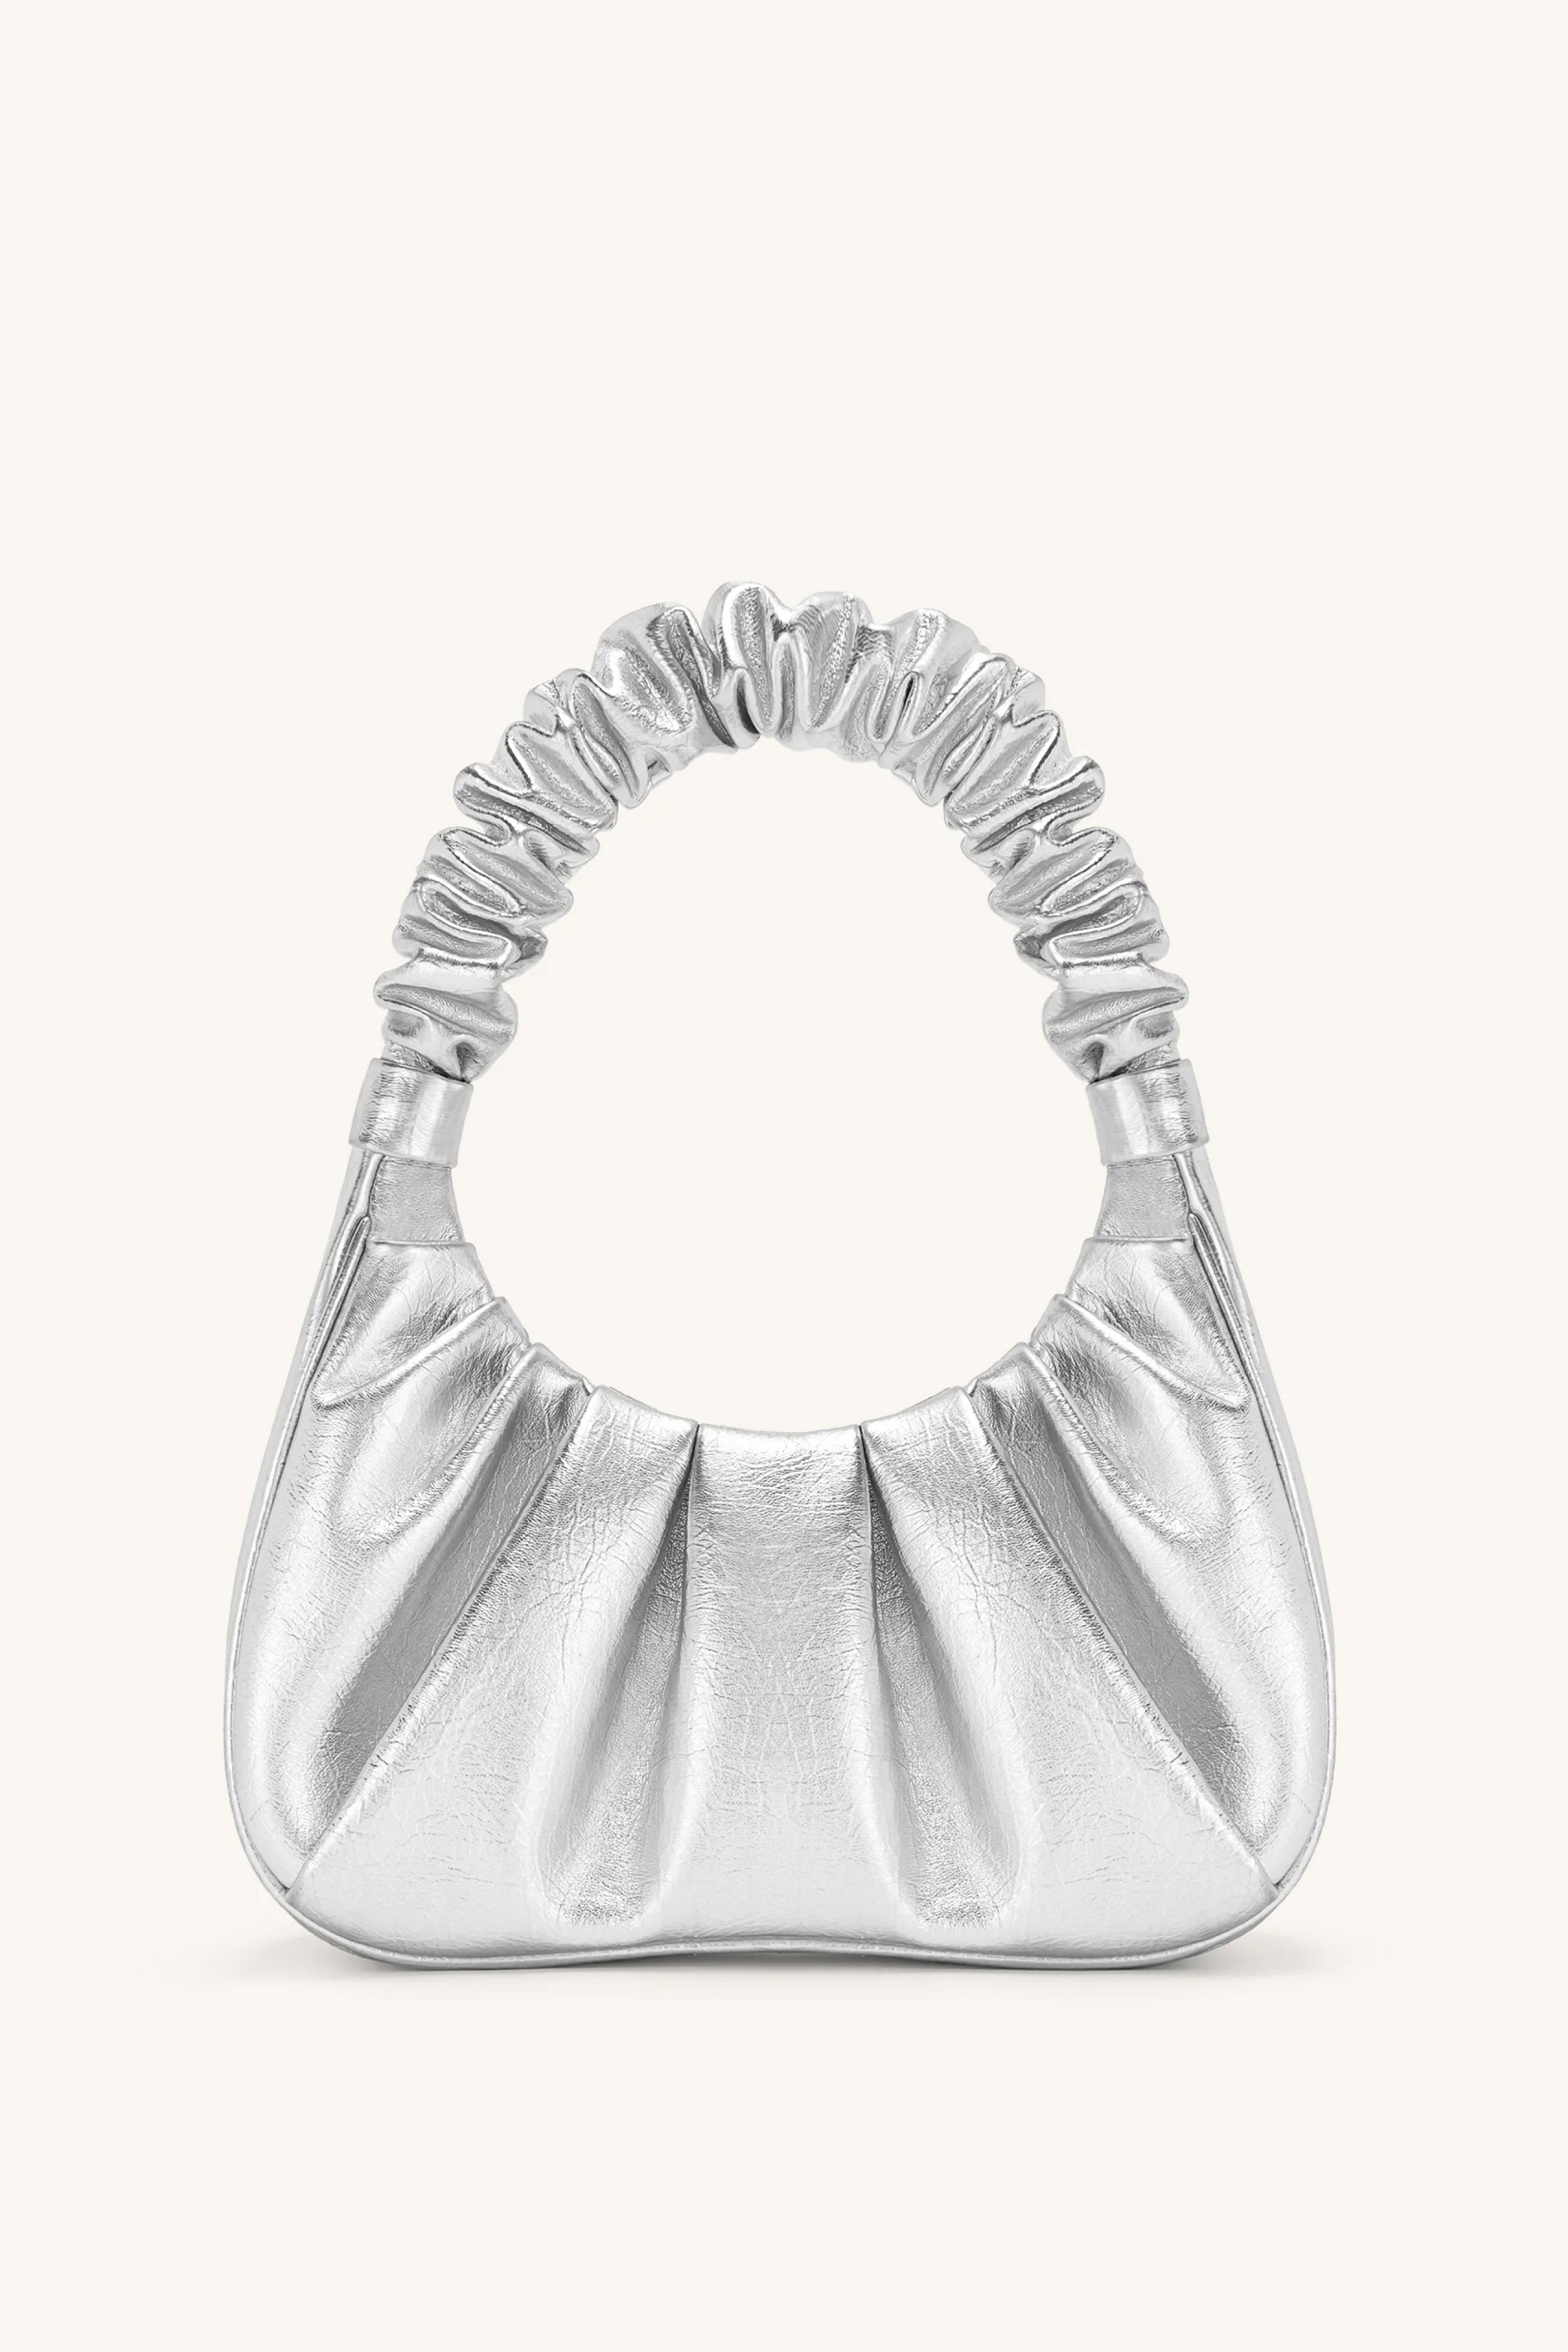 JW PEI  Gabbi Metallic Ruched Hobo Handbag Silver